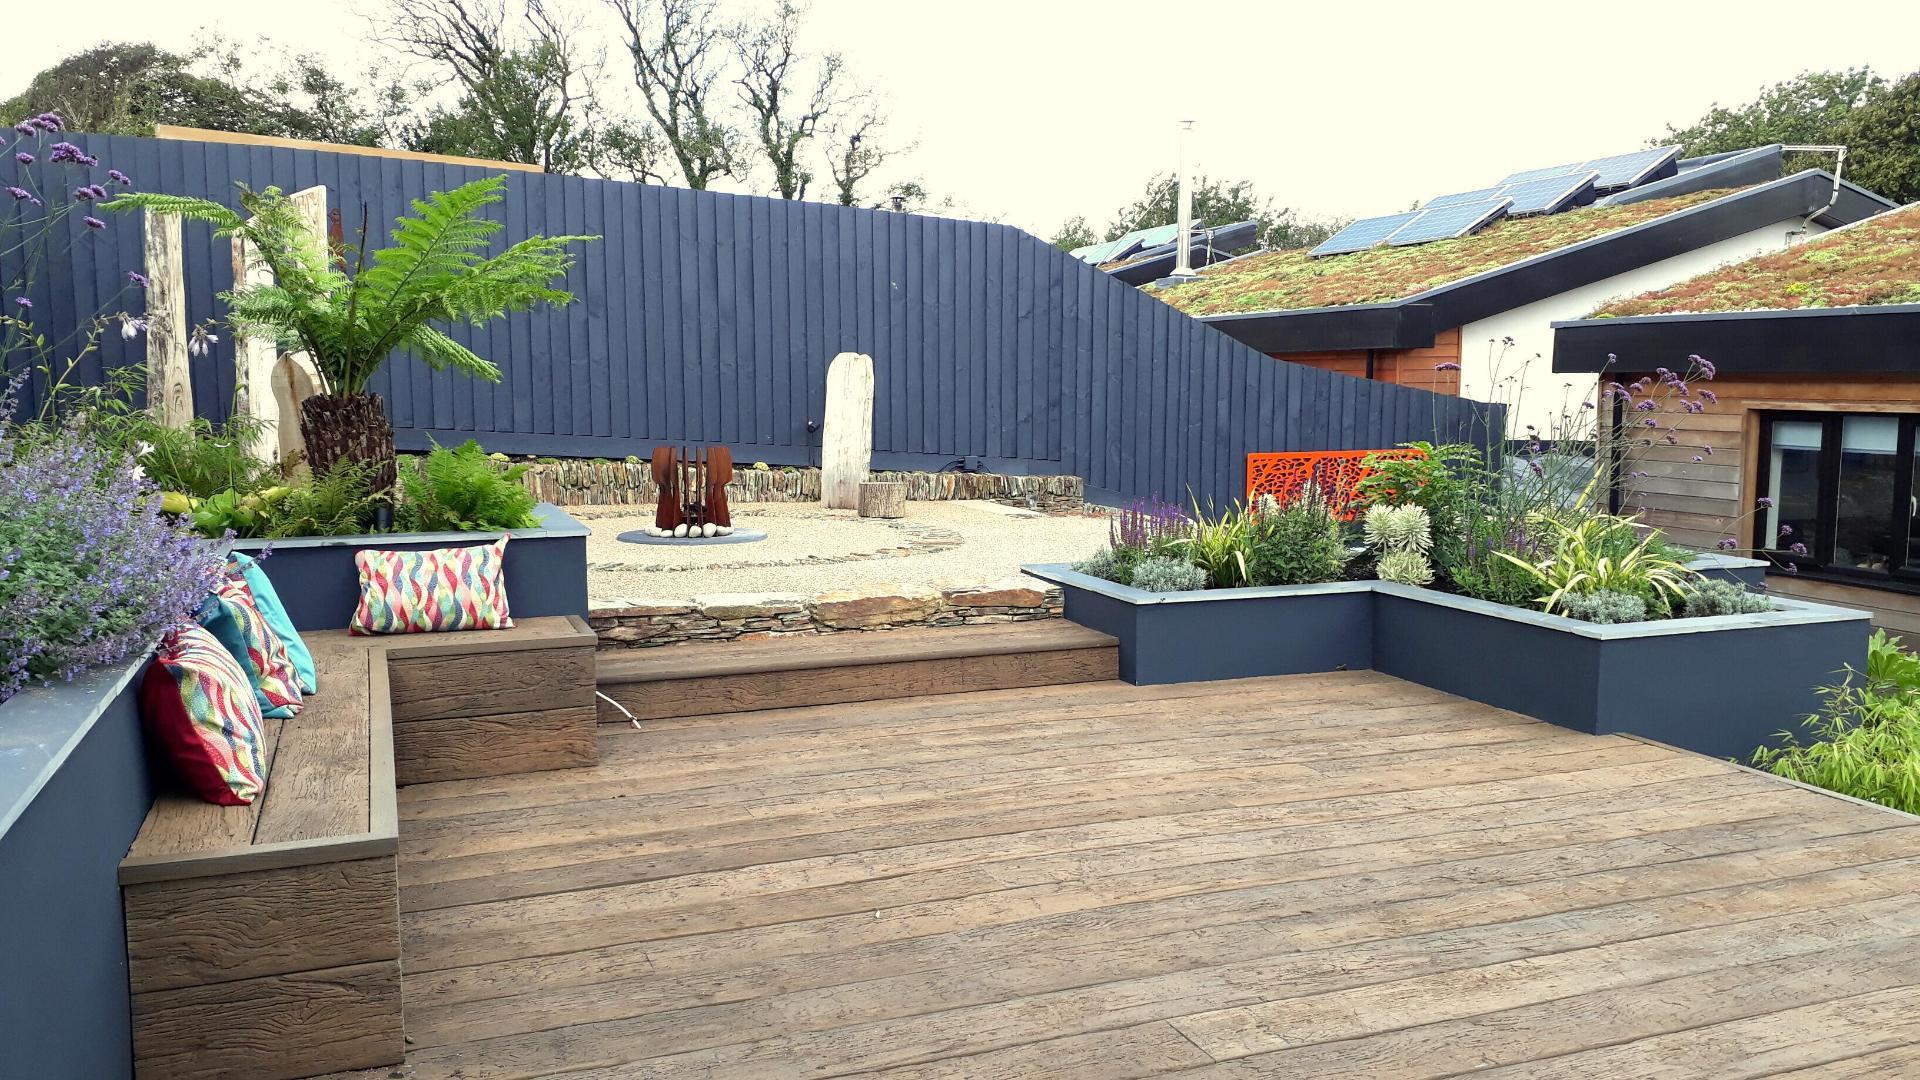 Alison Bockh Garden Design - Millboard decking and Raised beds